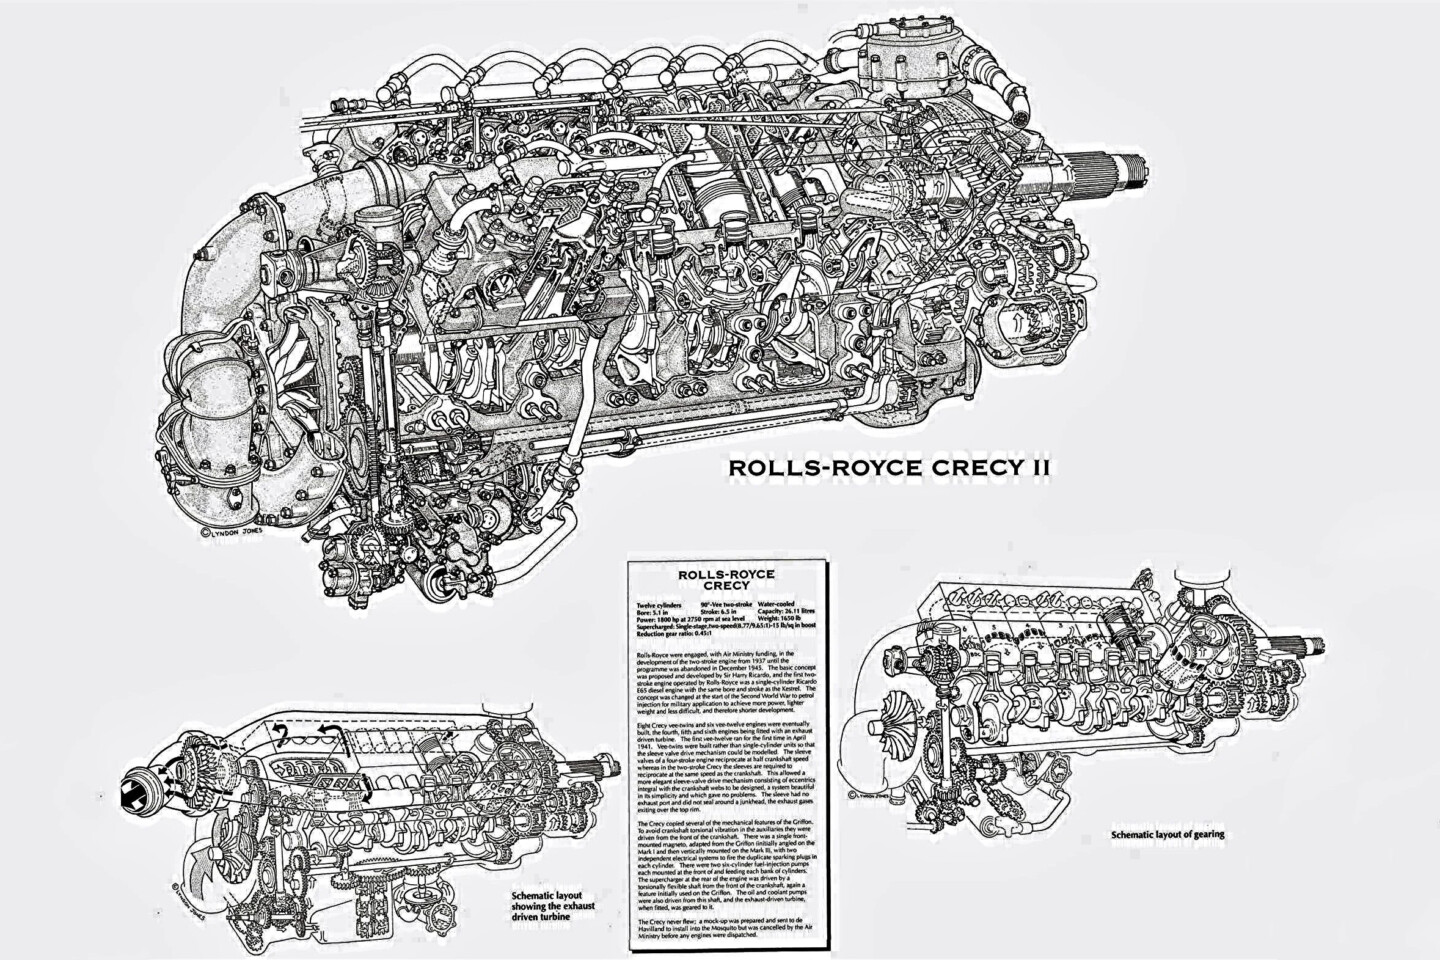 Rolls Royce Crecy engine